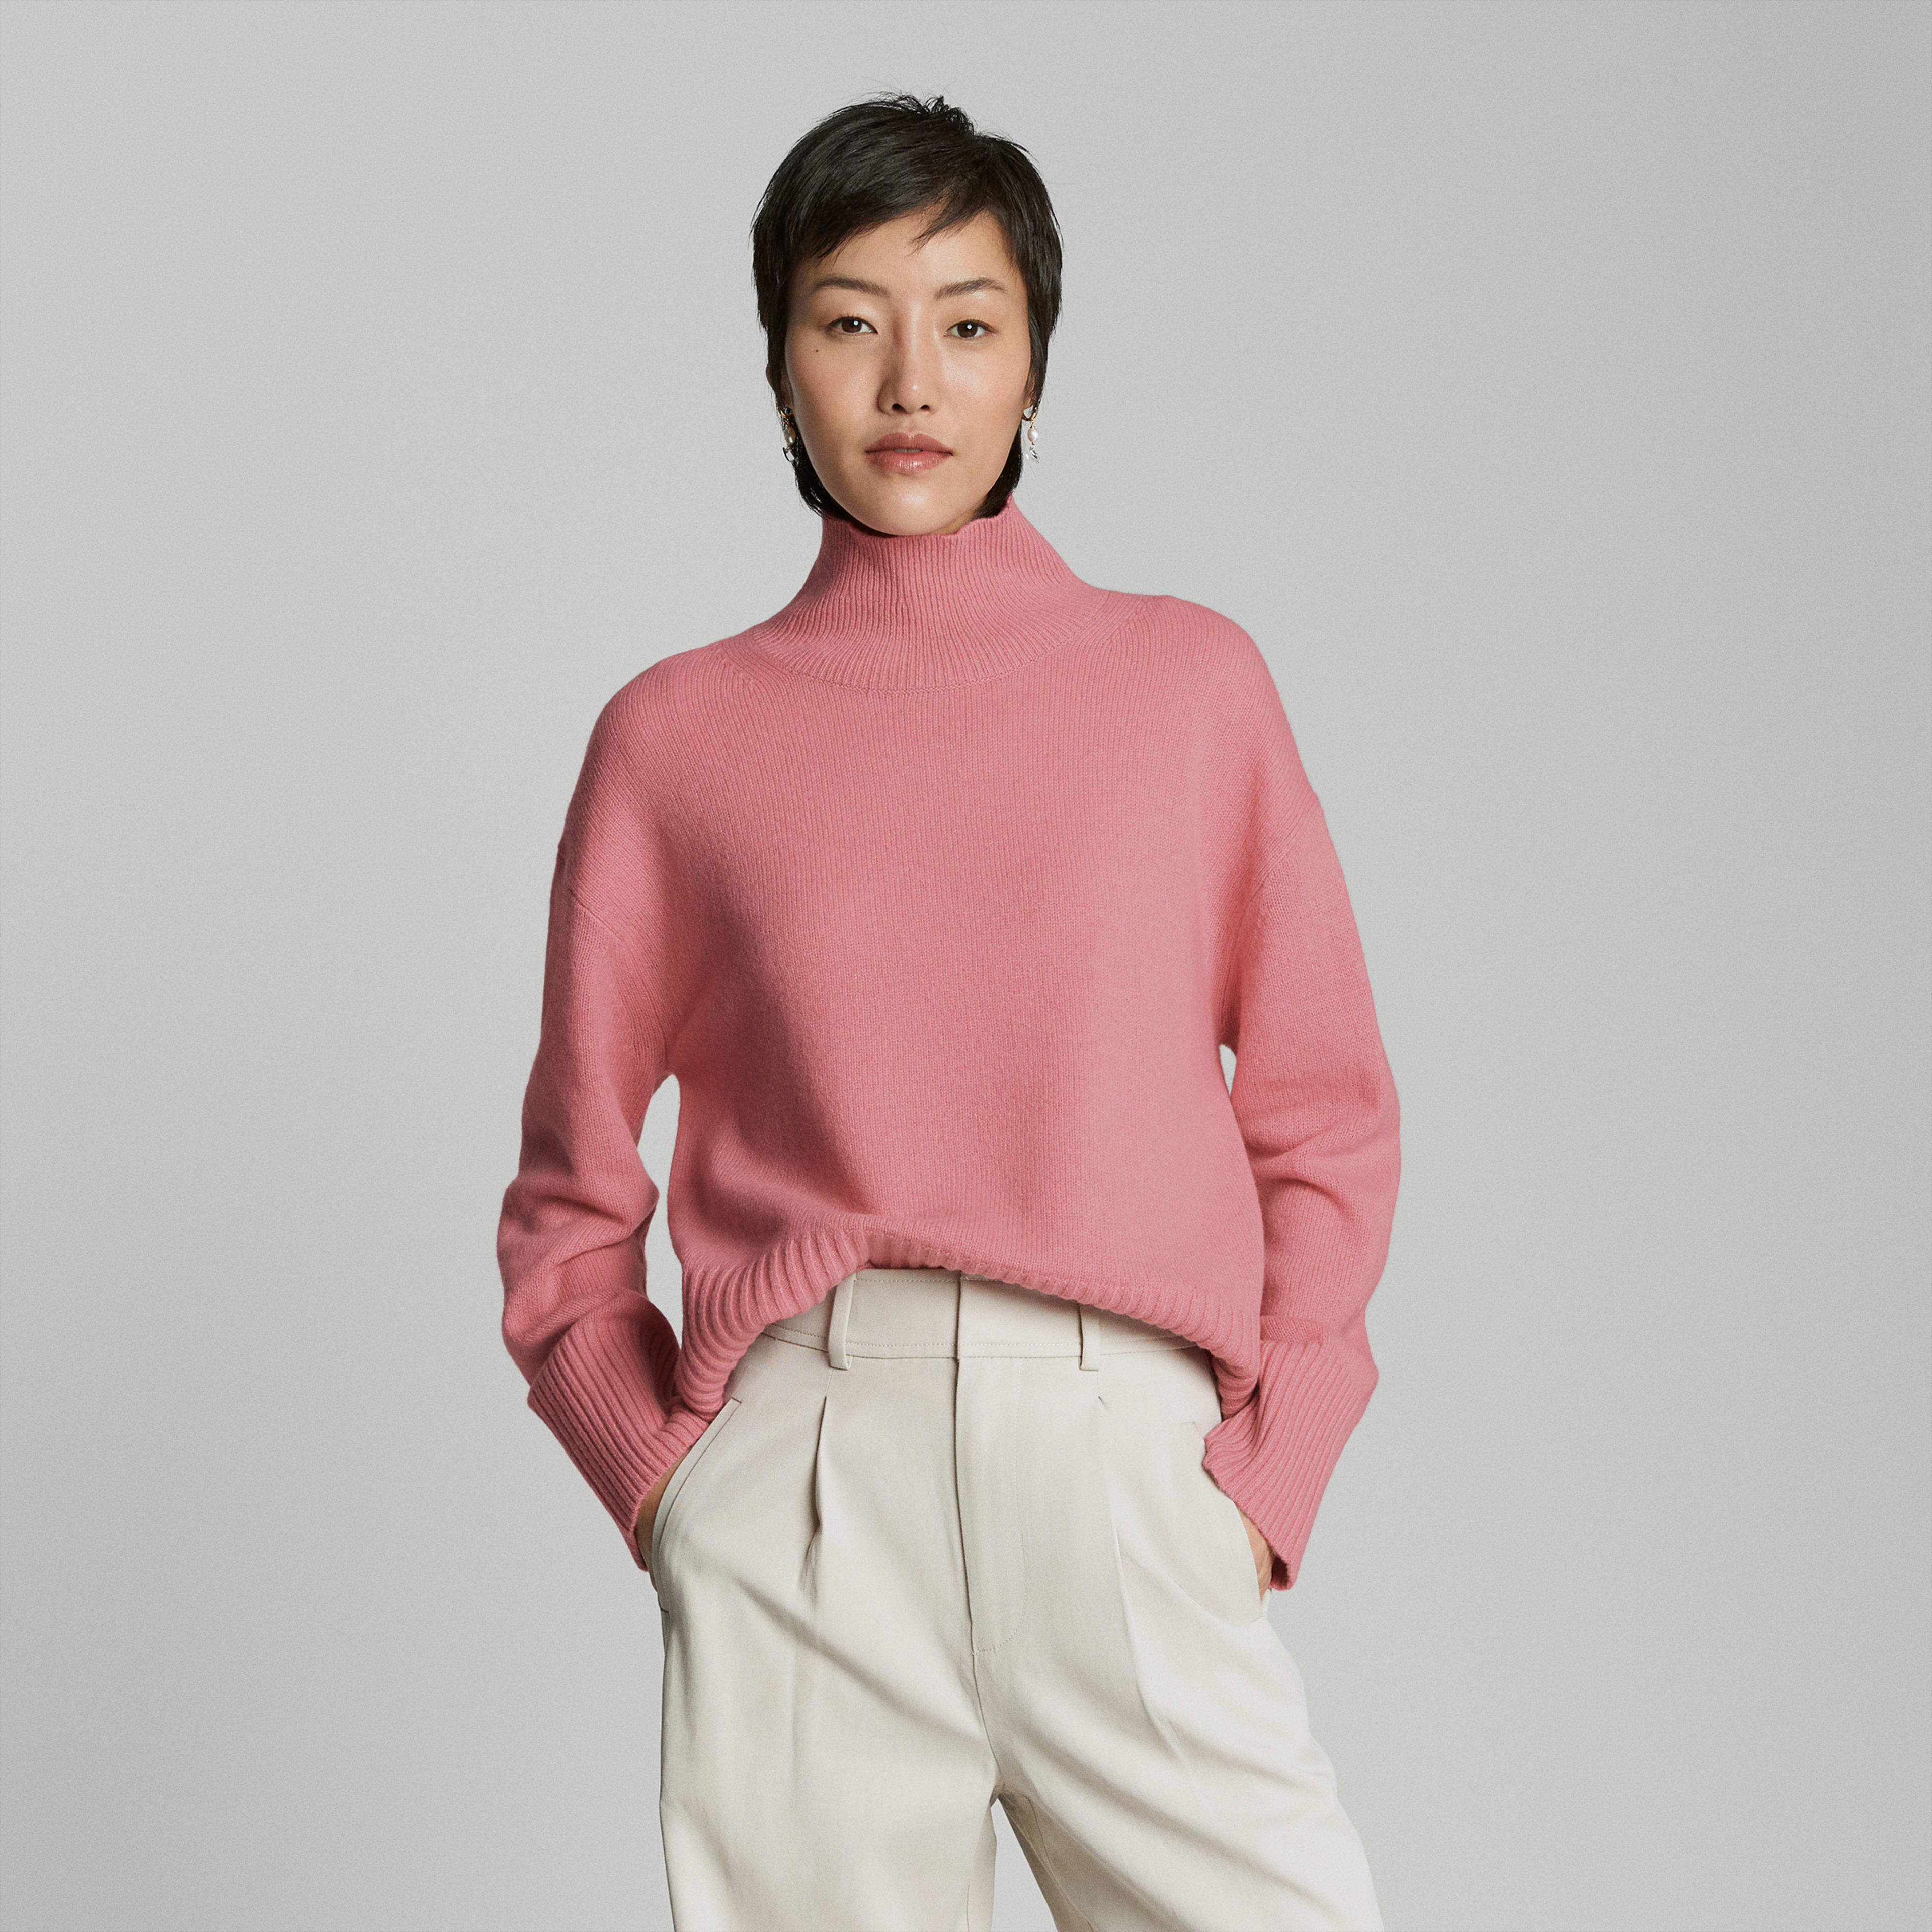 Women's Cashmere Oversized Turtleneck Sweater by Everlane in Bubblegum, Size M